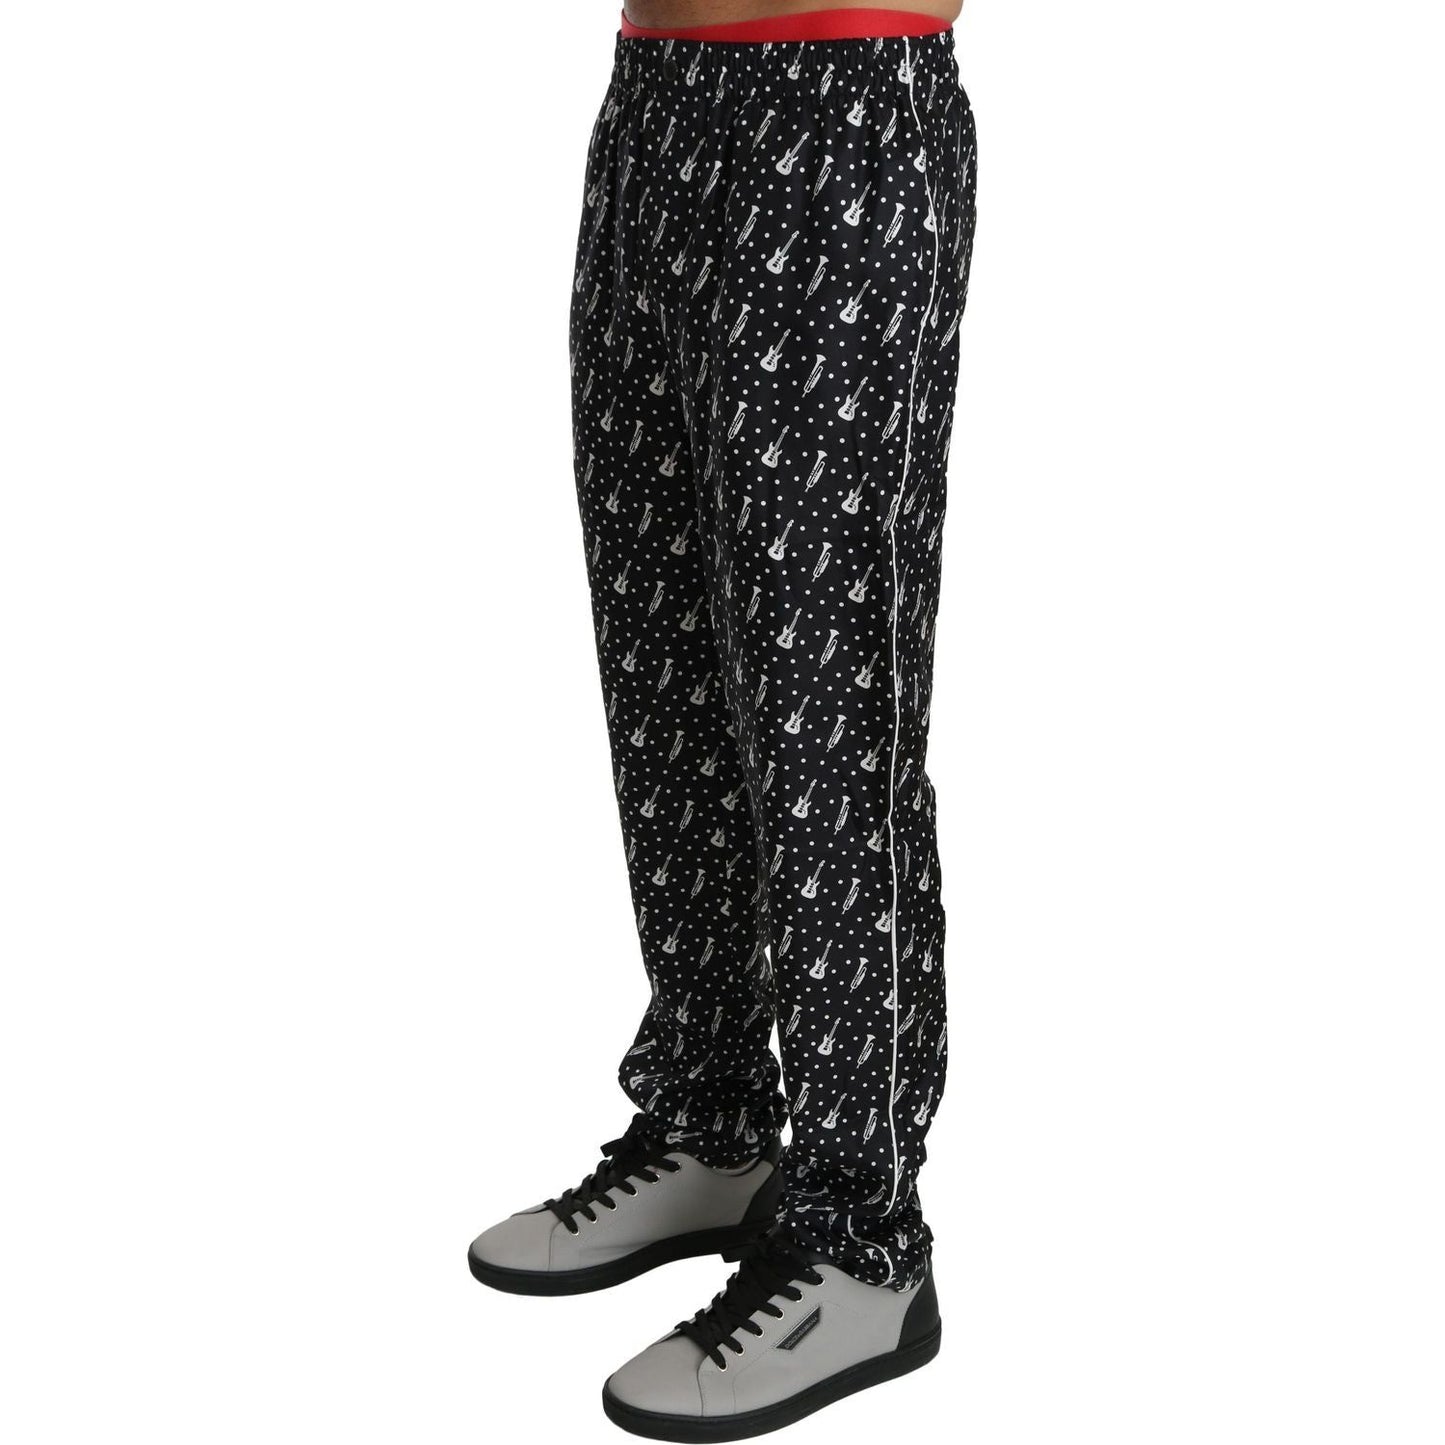 Dolce & Gabbana Elegant Black Musical Instrument Print Silk Pants silk-black-musical-instrument-trouser-pants IMG_1022-1-scaled-0dae301b-ba2.jpg